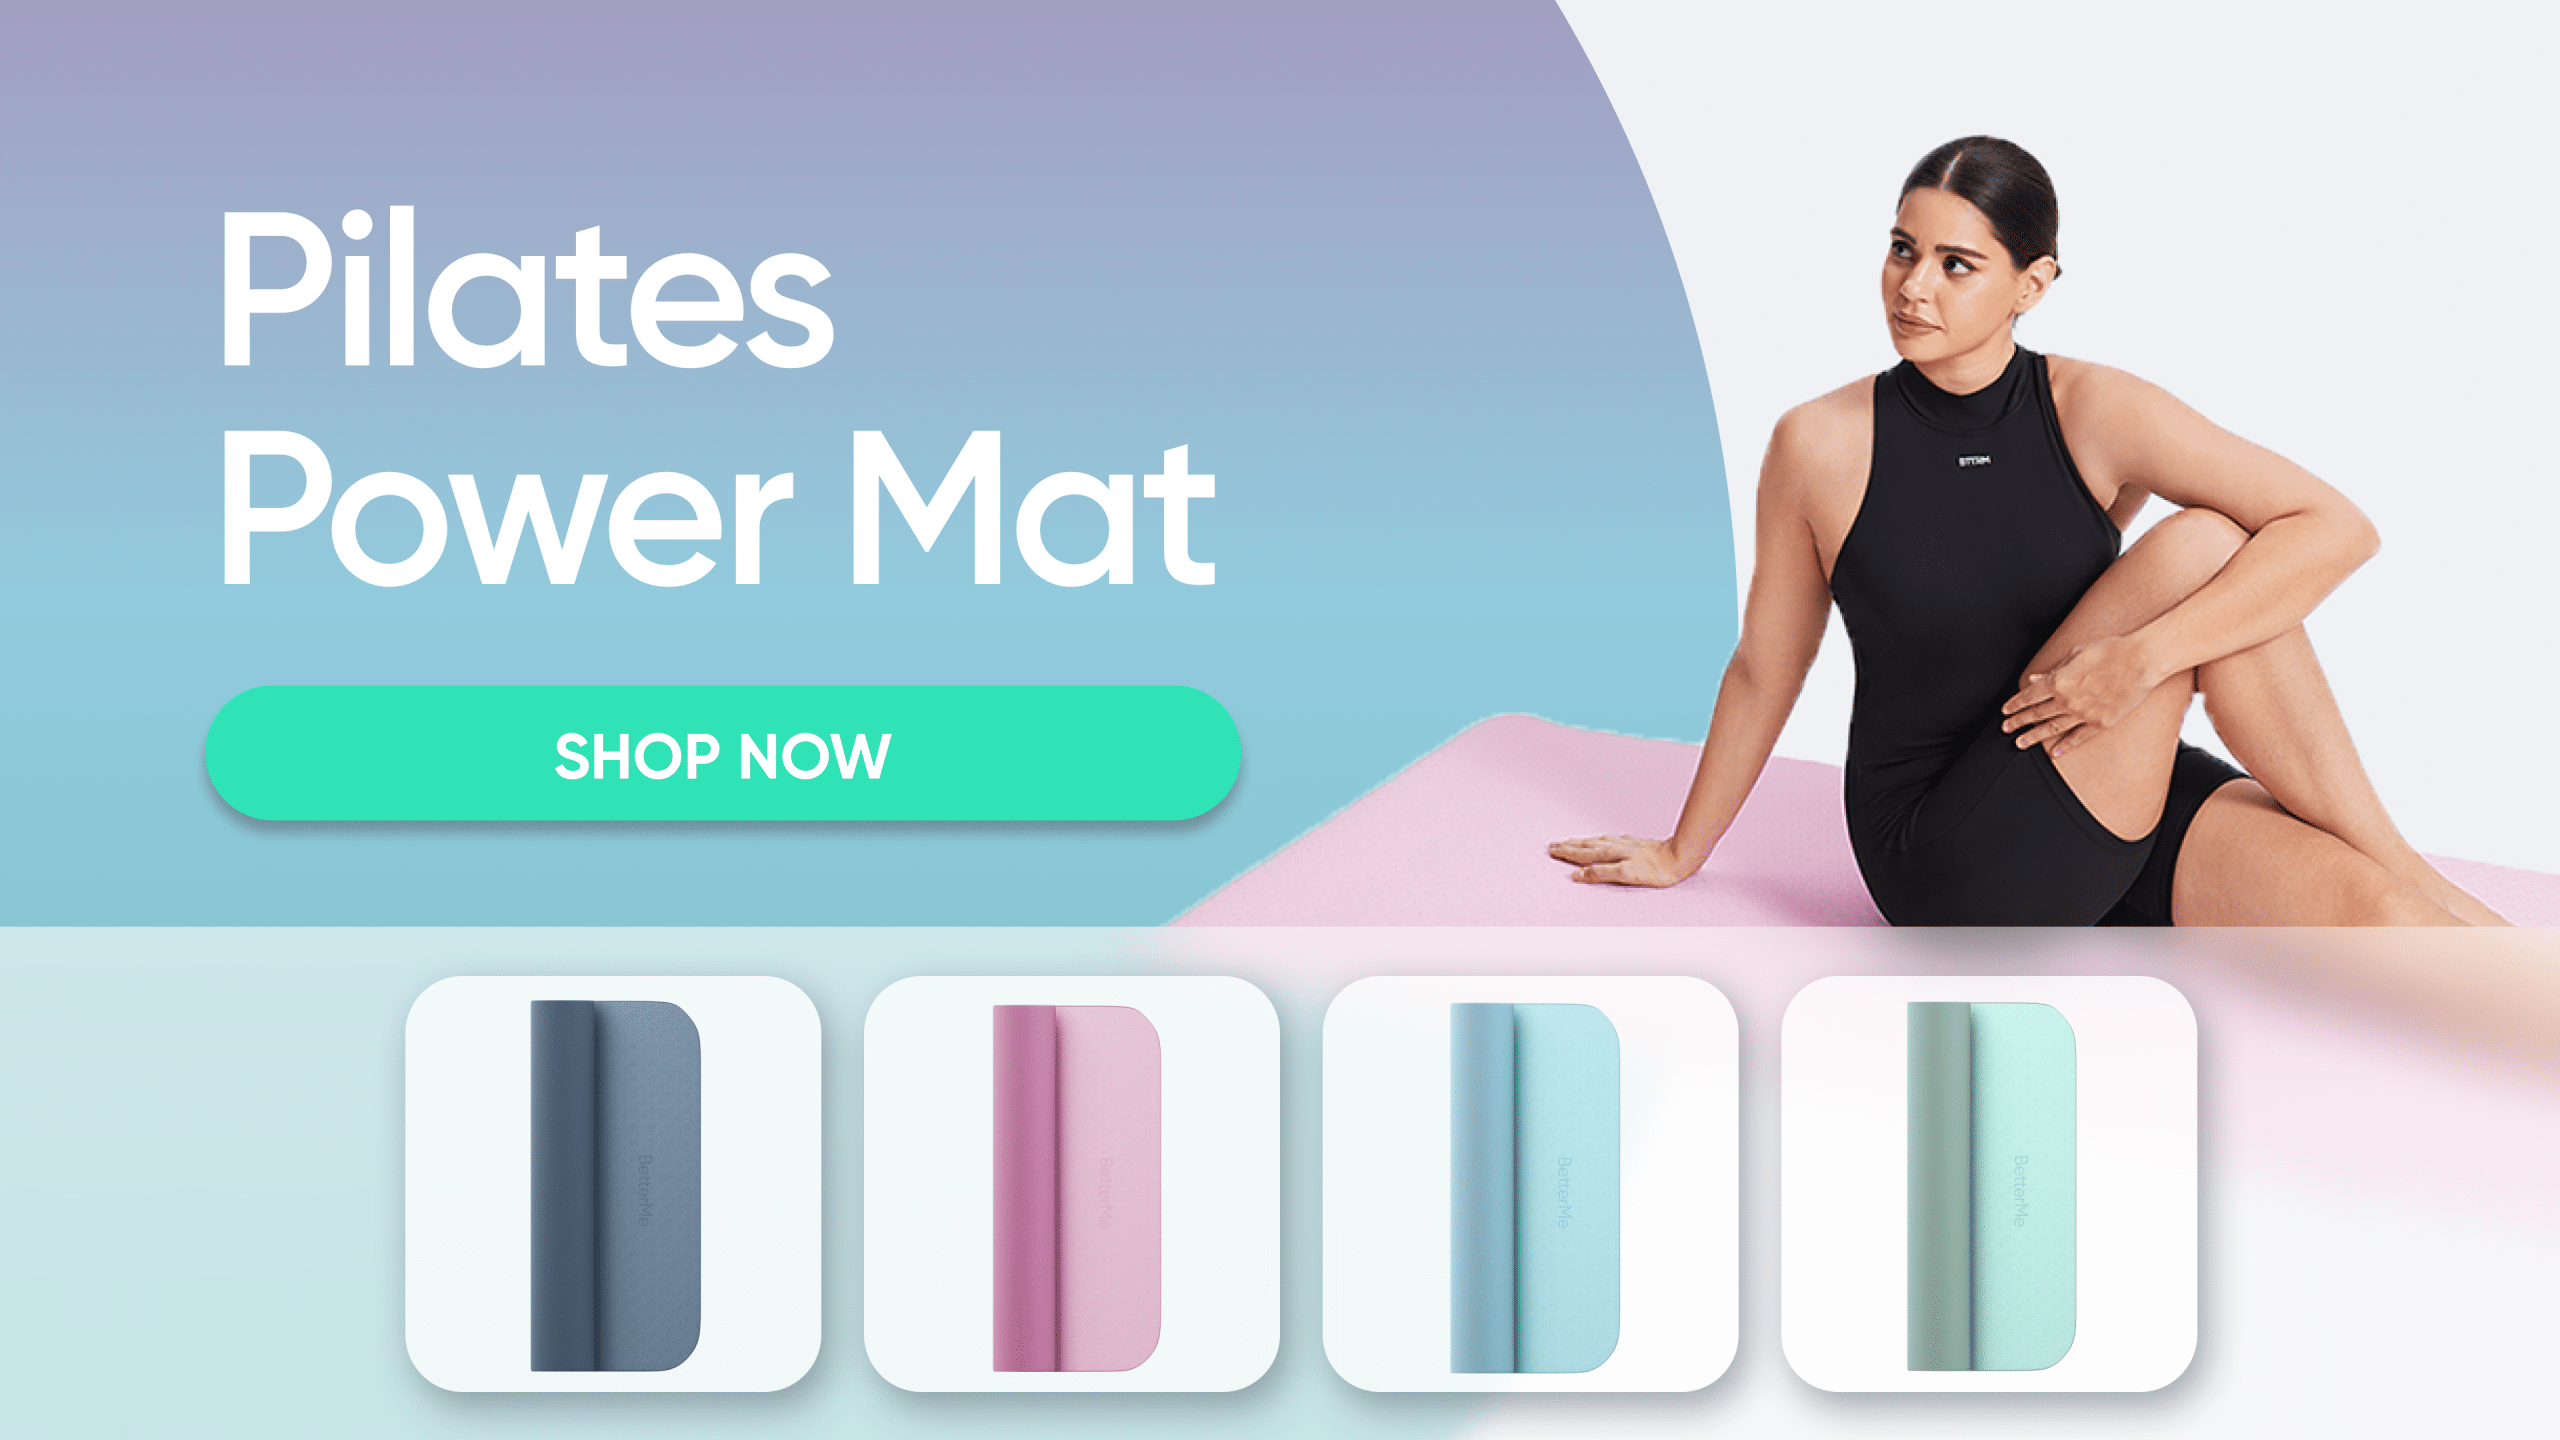 pilates mat workout